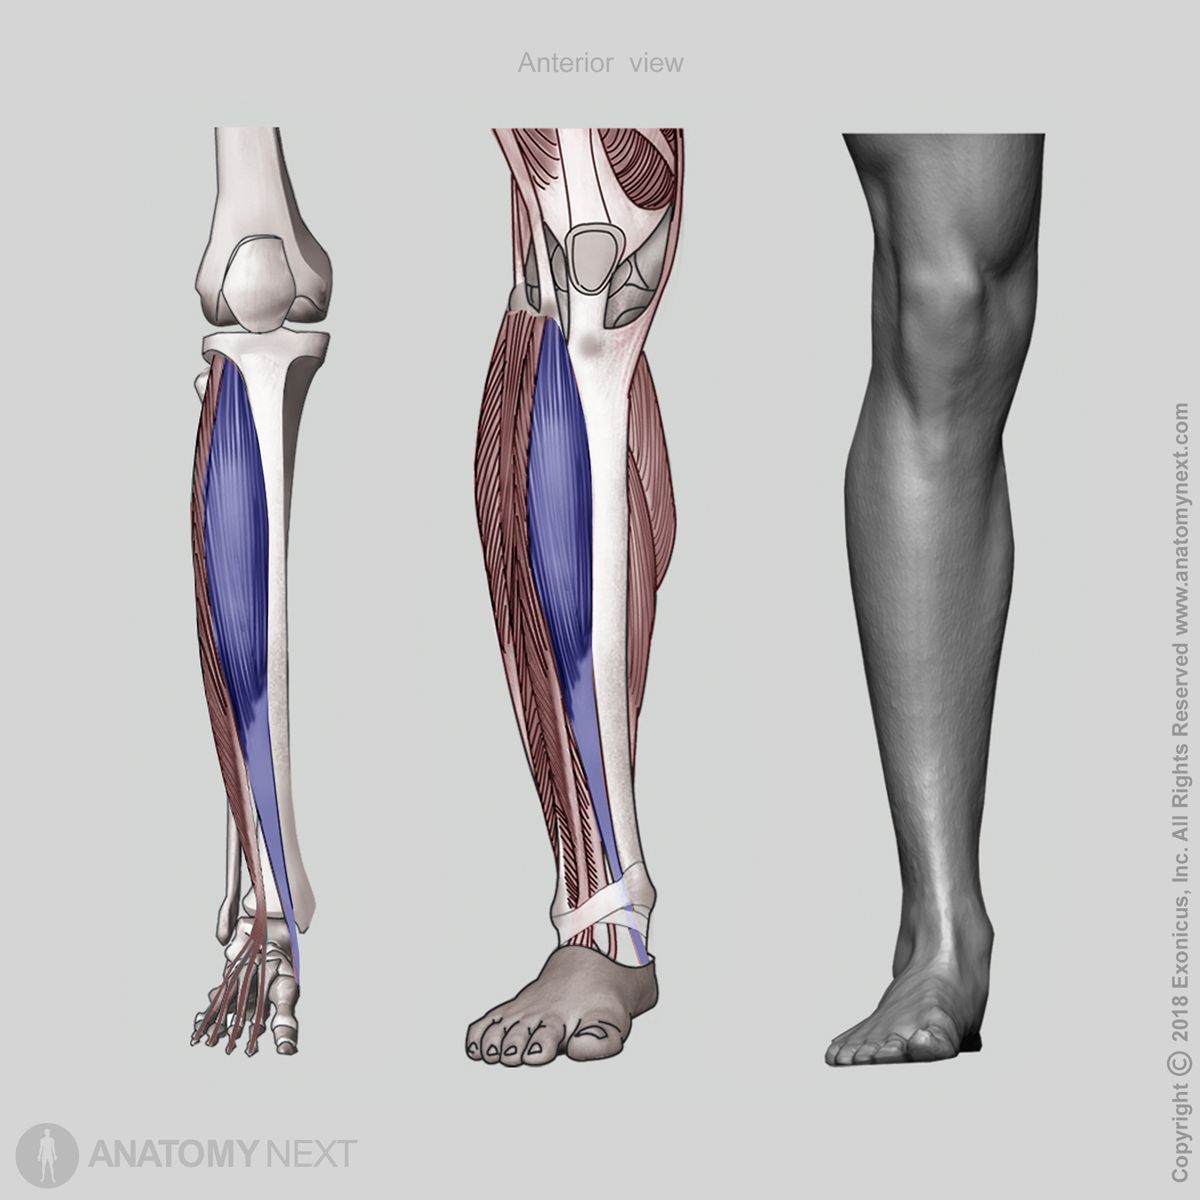 Tibialis anterior, Anterior compartment of leg, Leg extensors, Leg muscles, Anterior compartment muscles, Human leg